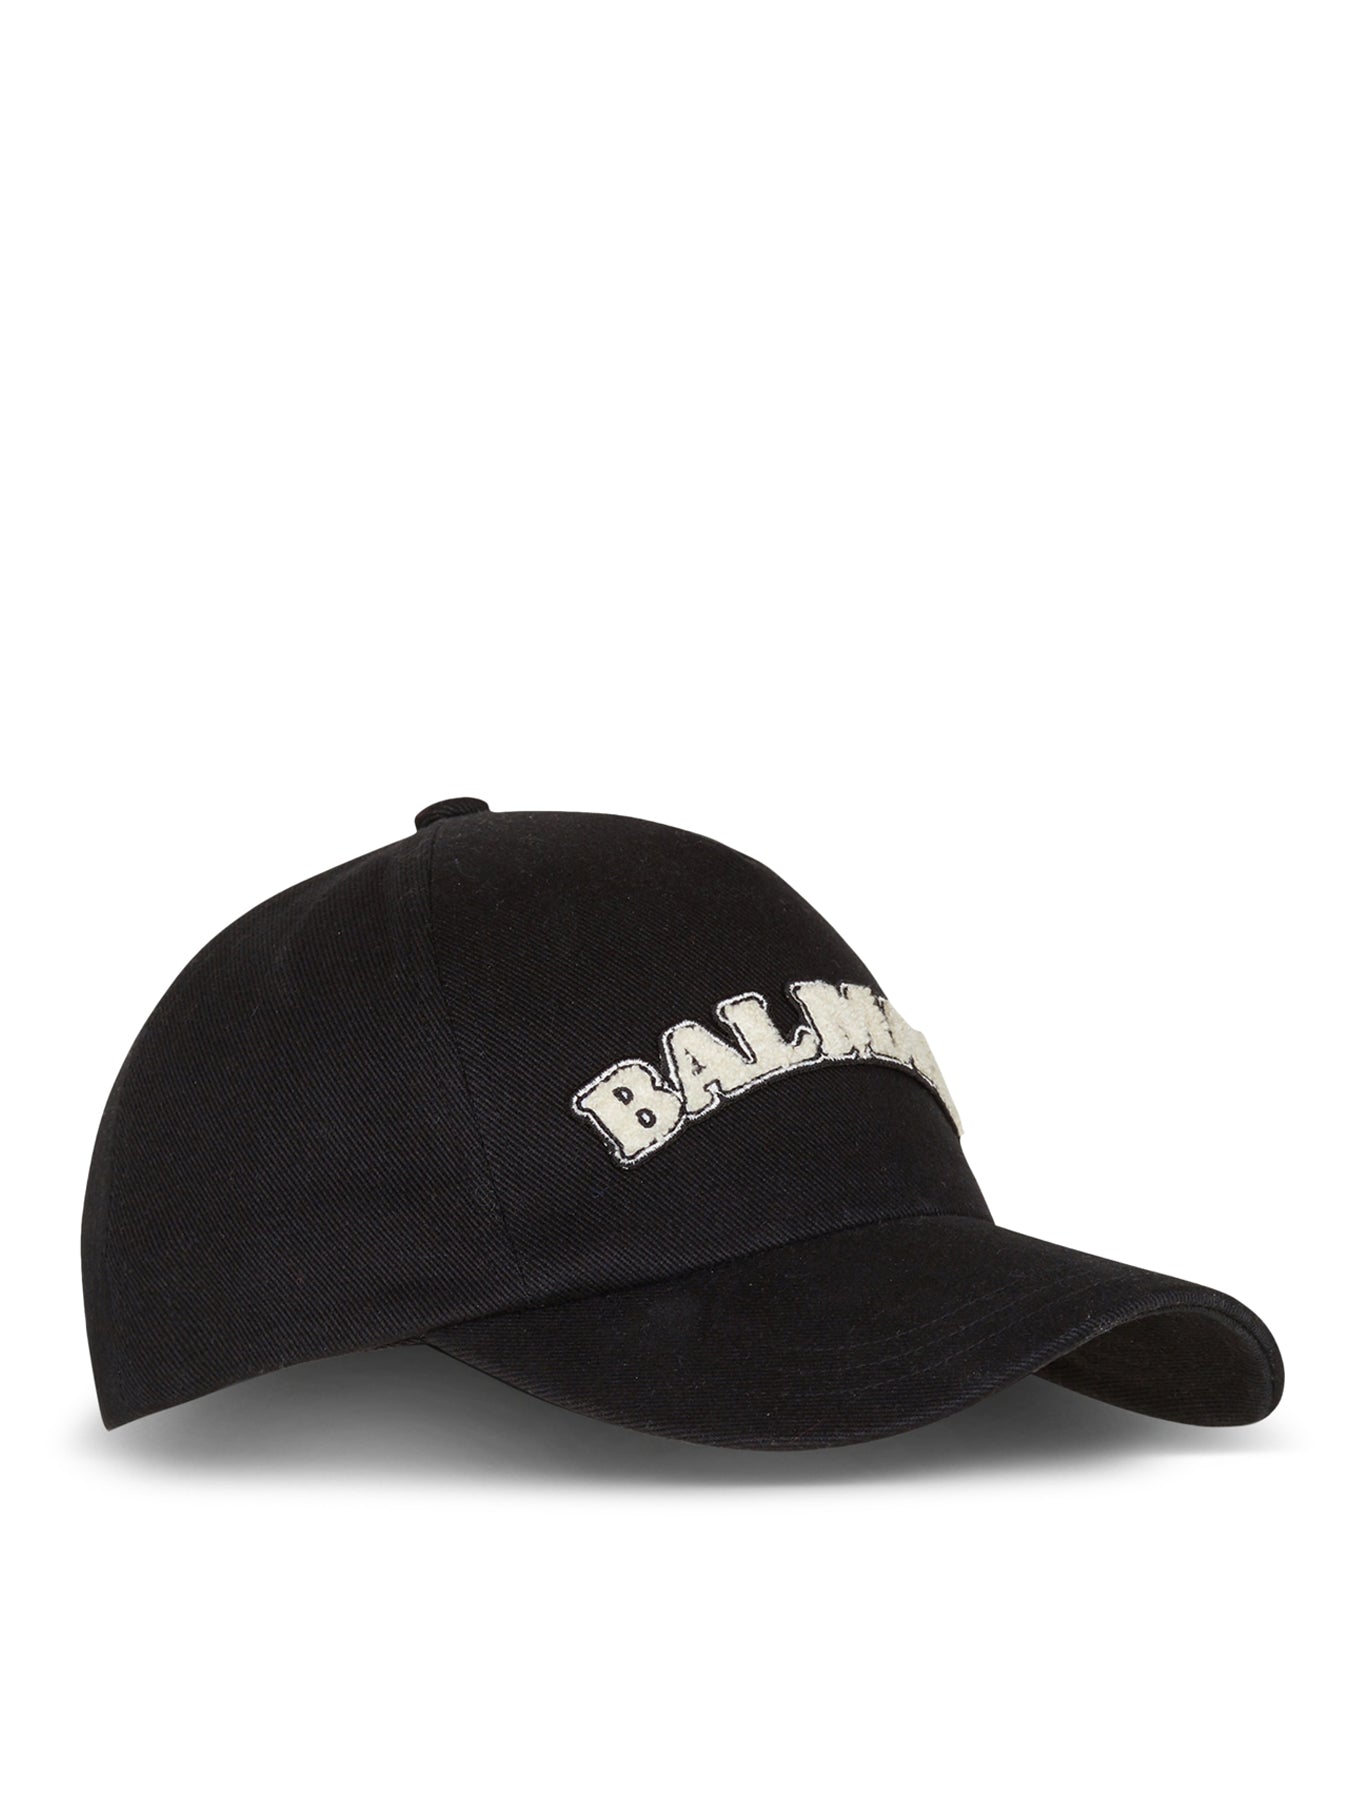 Embroidered Balmain cap